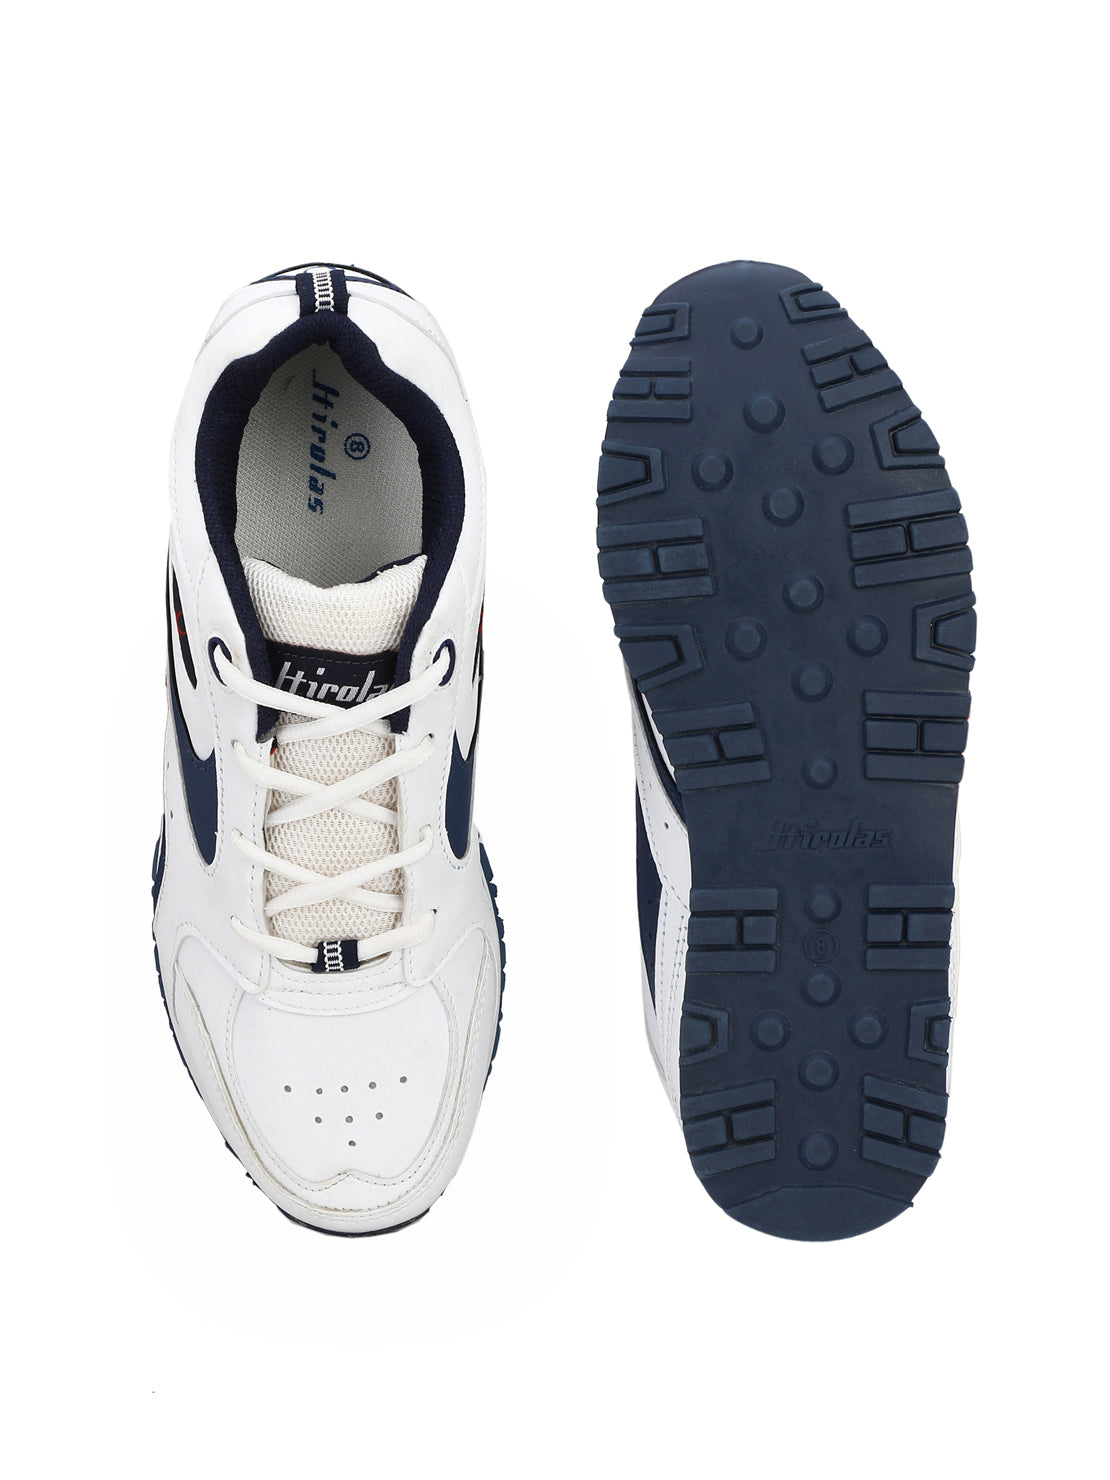 Hirolas® Men's White Multisports Lace Up Sneaker Sport Shoes (HRL1852G)